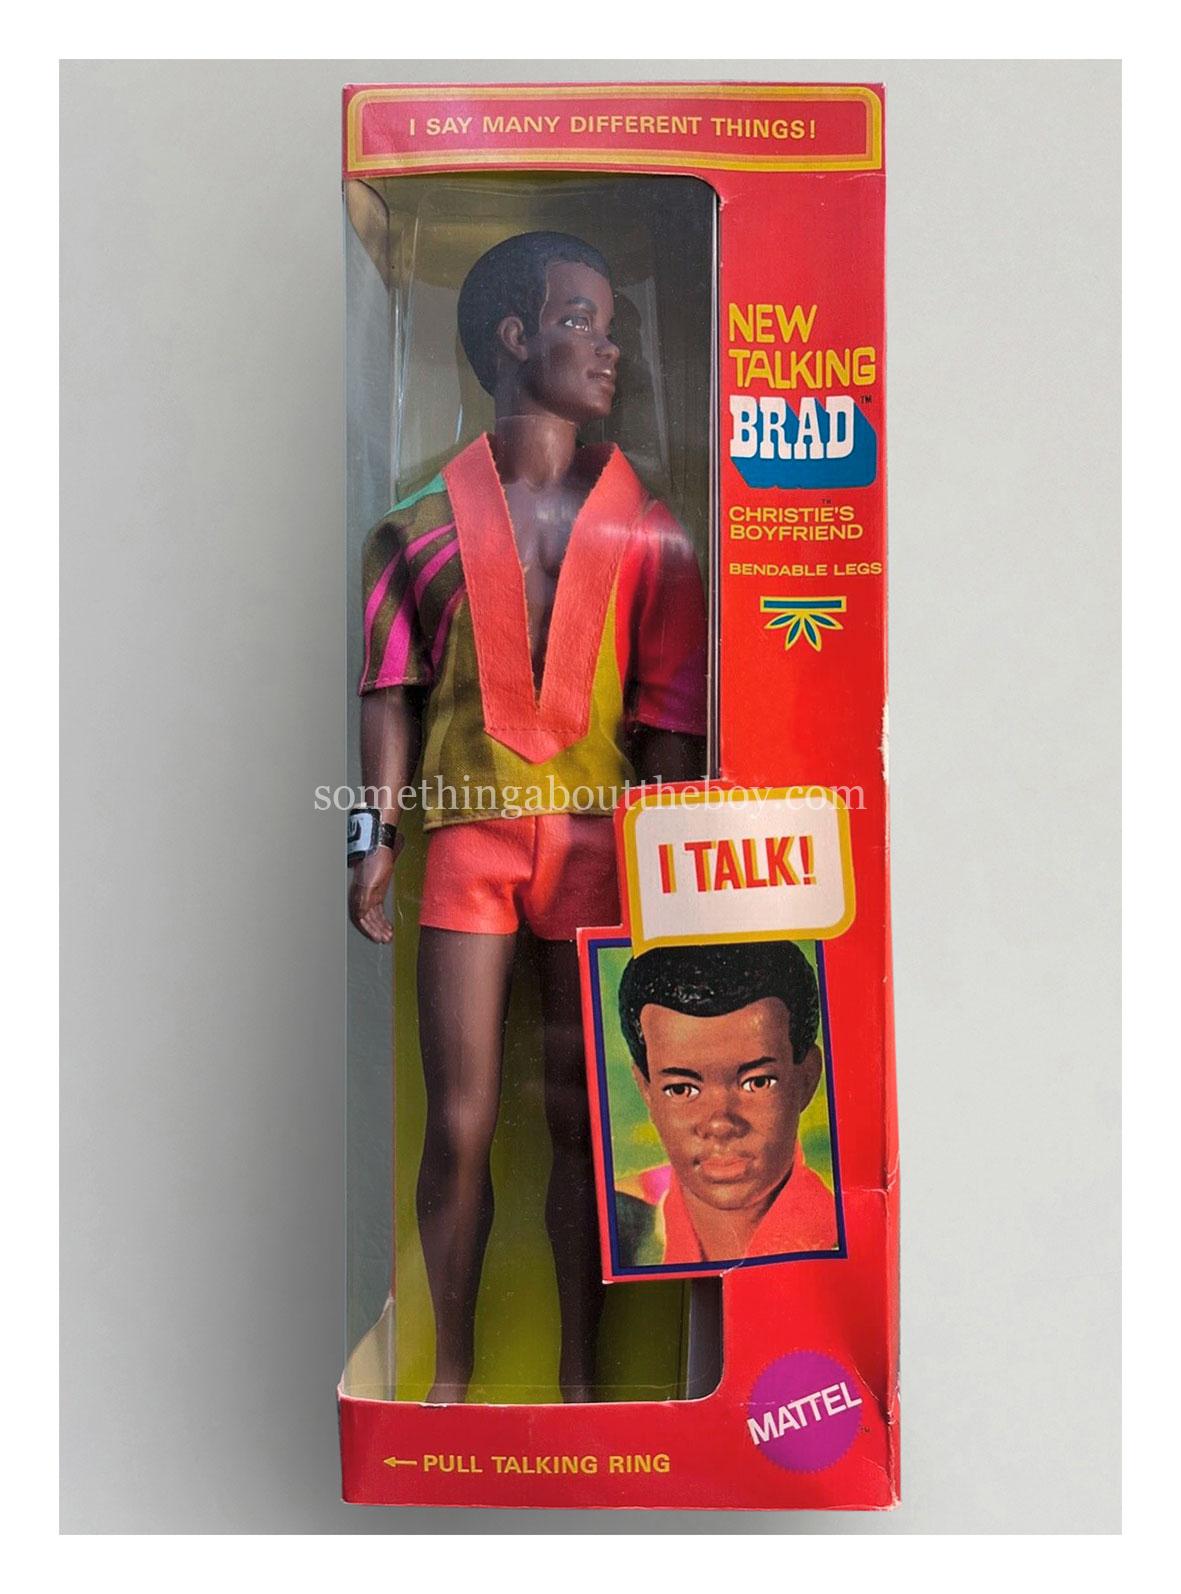 1970-71 #1114 New Talking Brad in original packaging